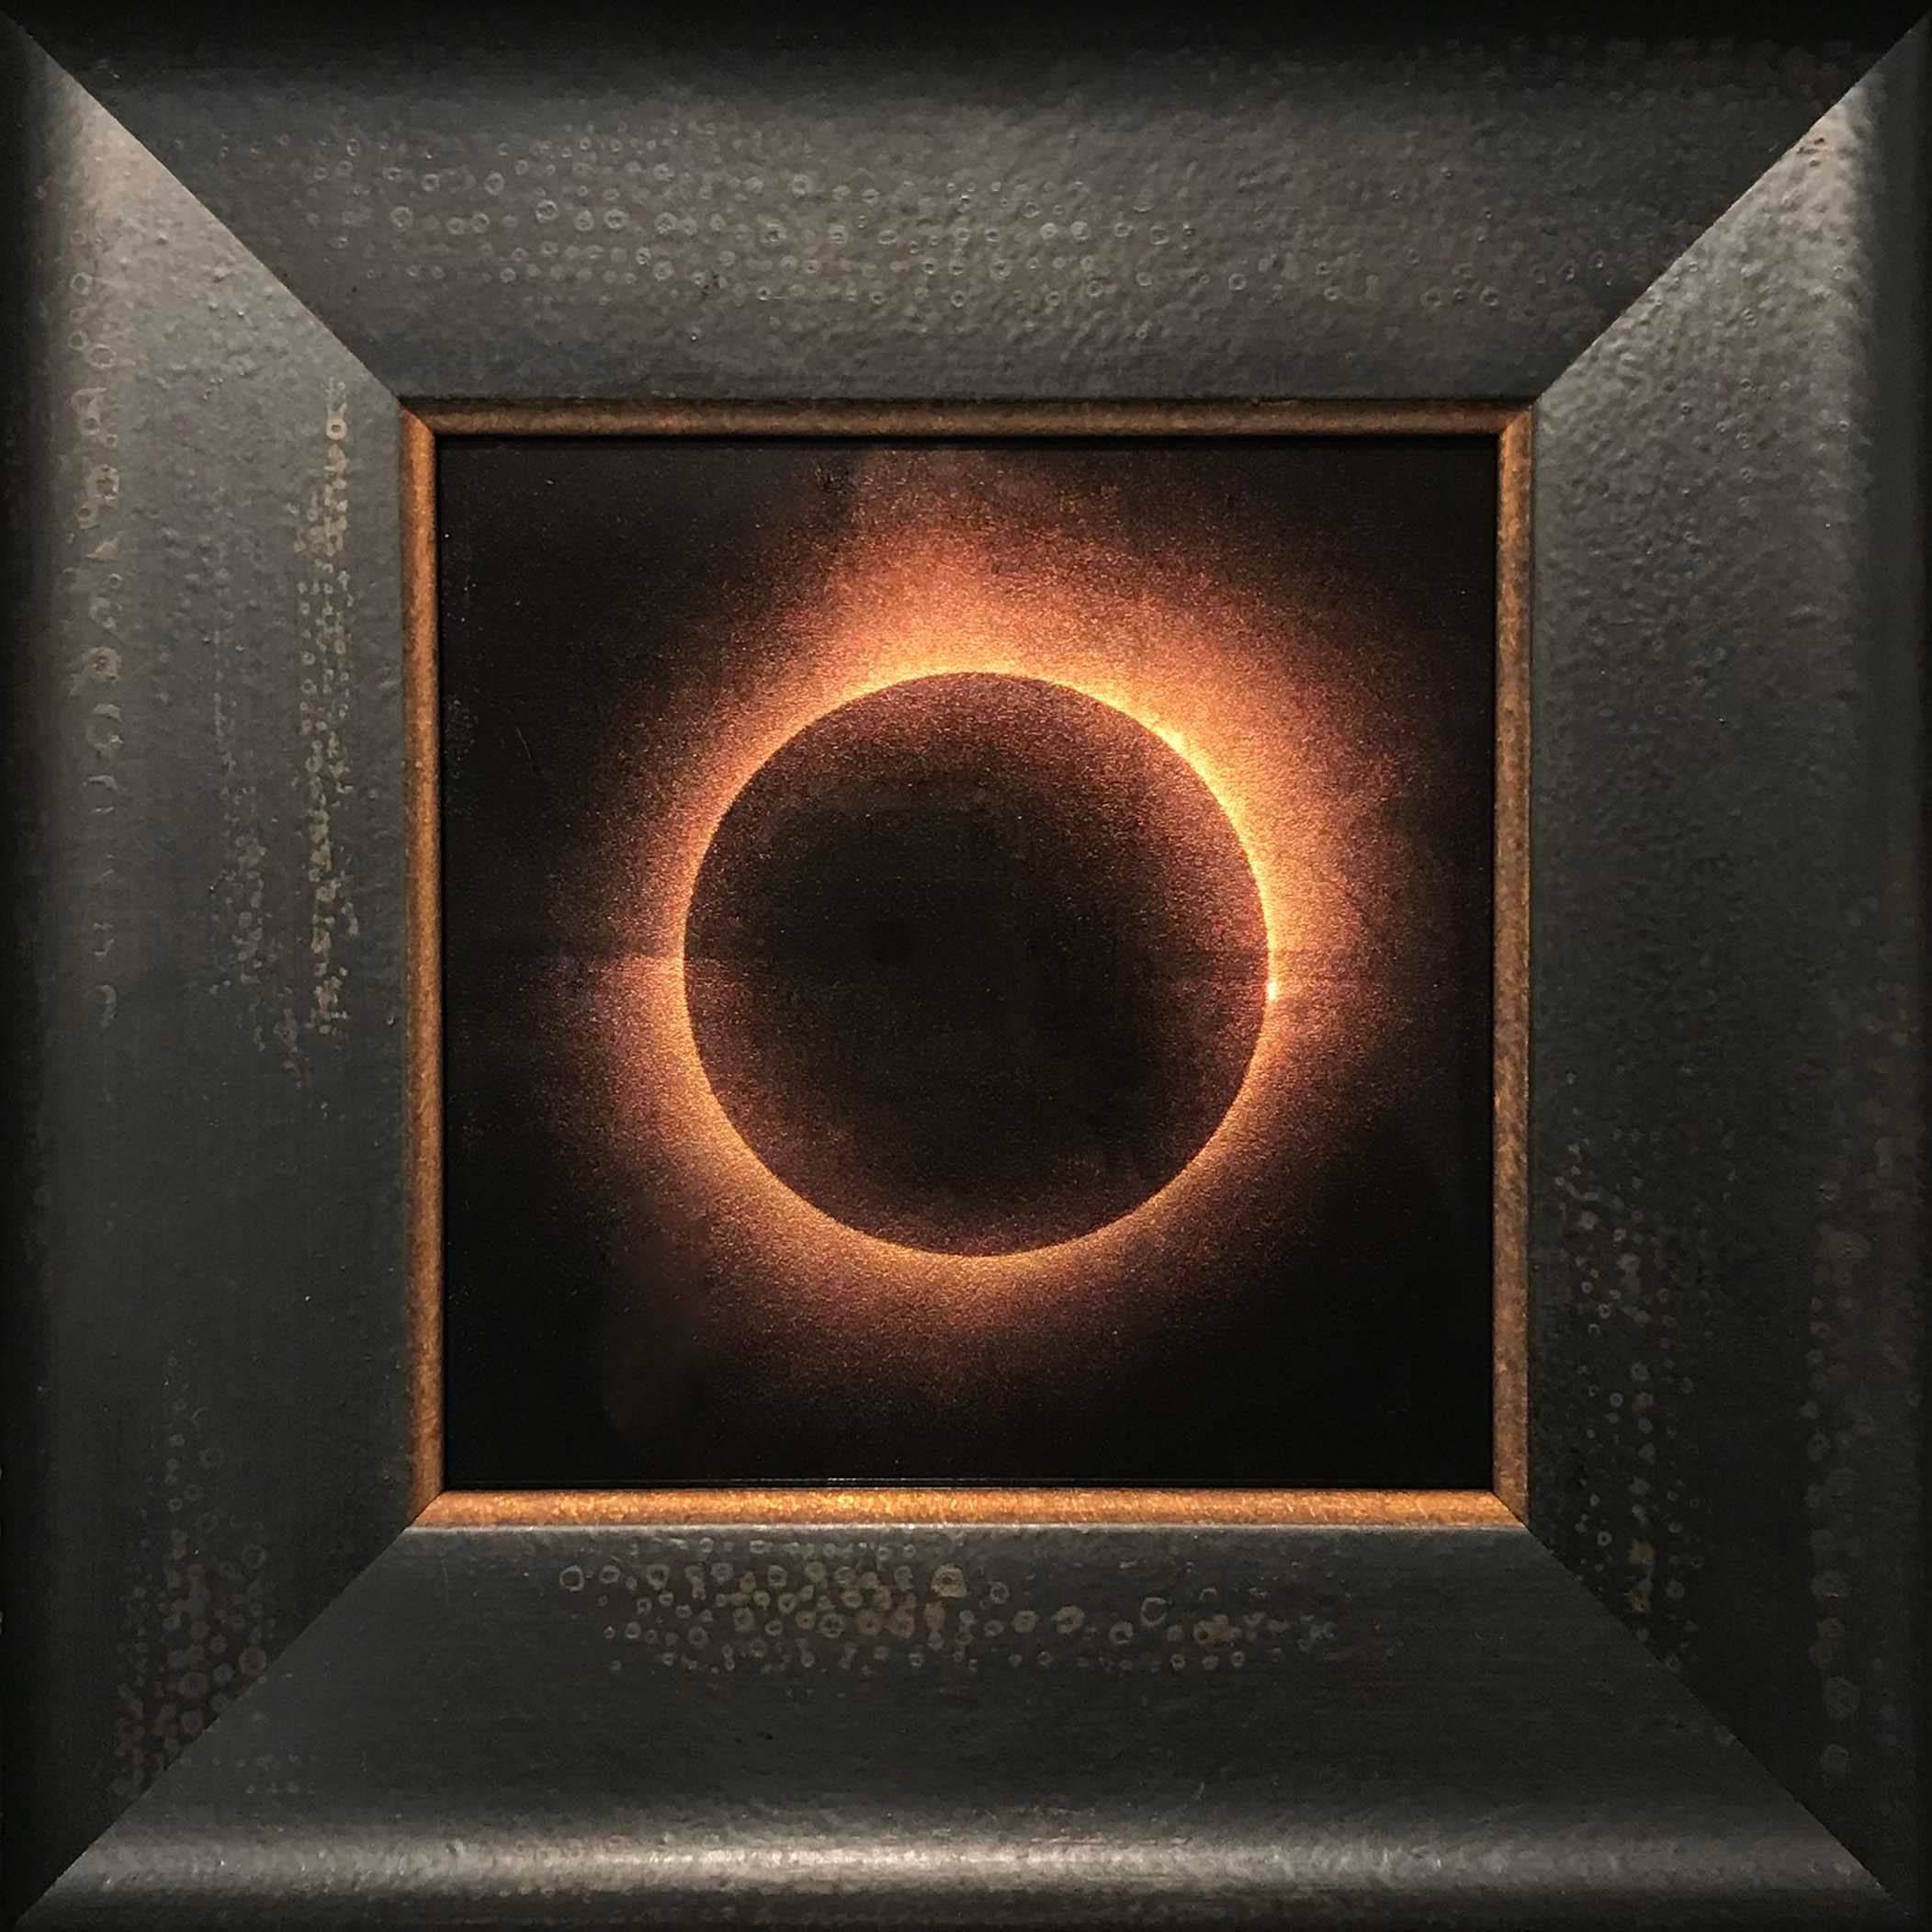 Kate Breakey Color Photograph - Solar Eclipse, Totality/Bailey’s Beads, Nebraska, August 21 (dark) [Ref. #18]